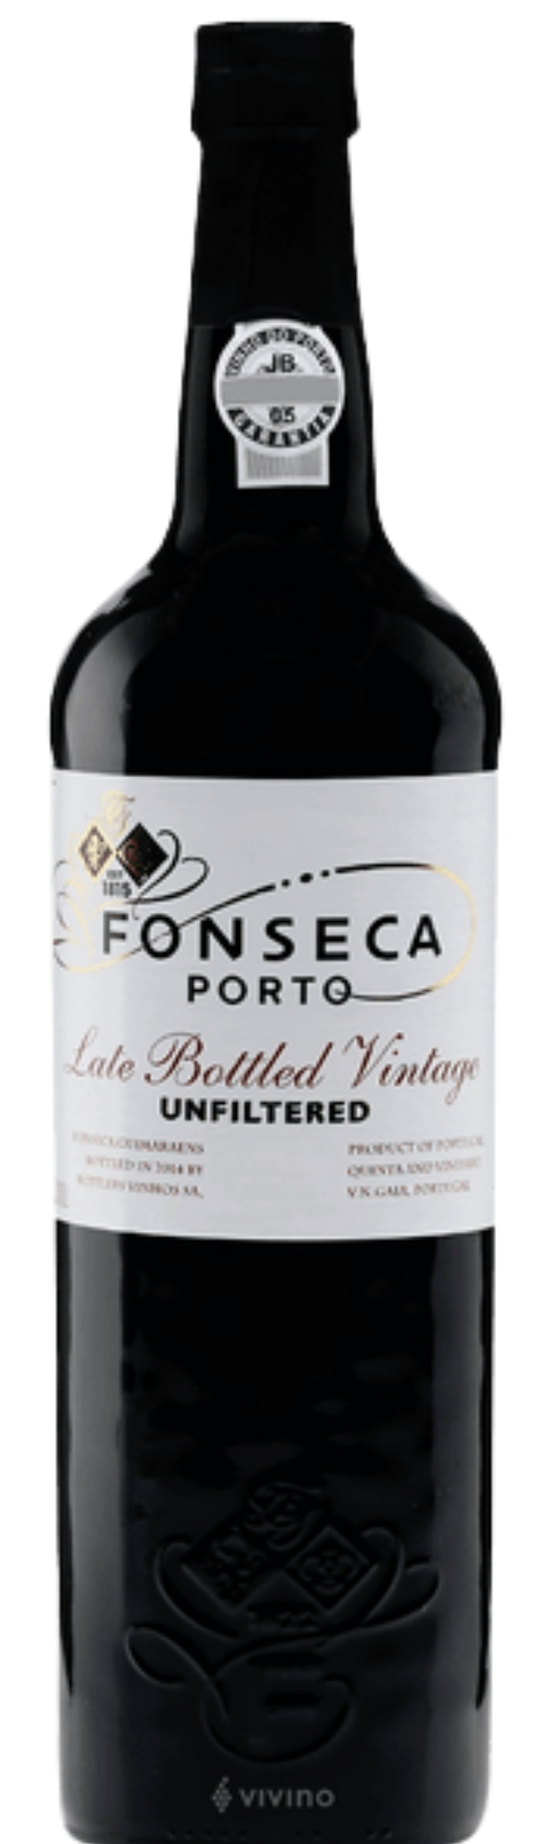 Fonseca LBV 2015 Unfiltered Port